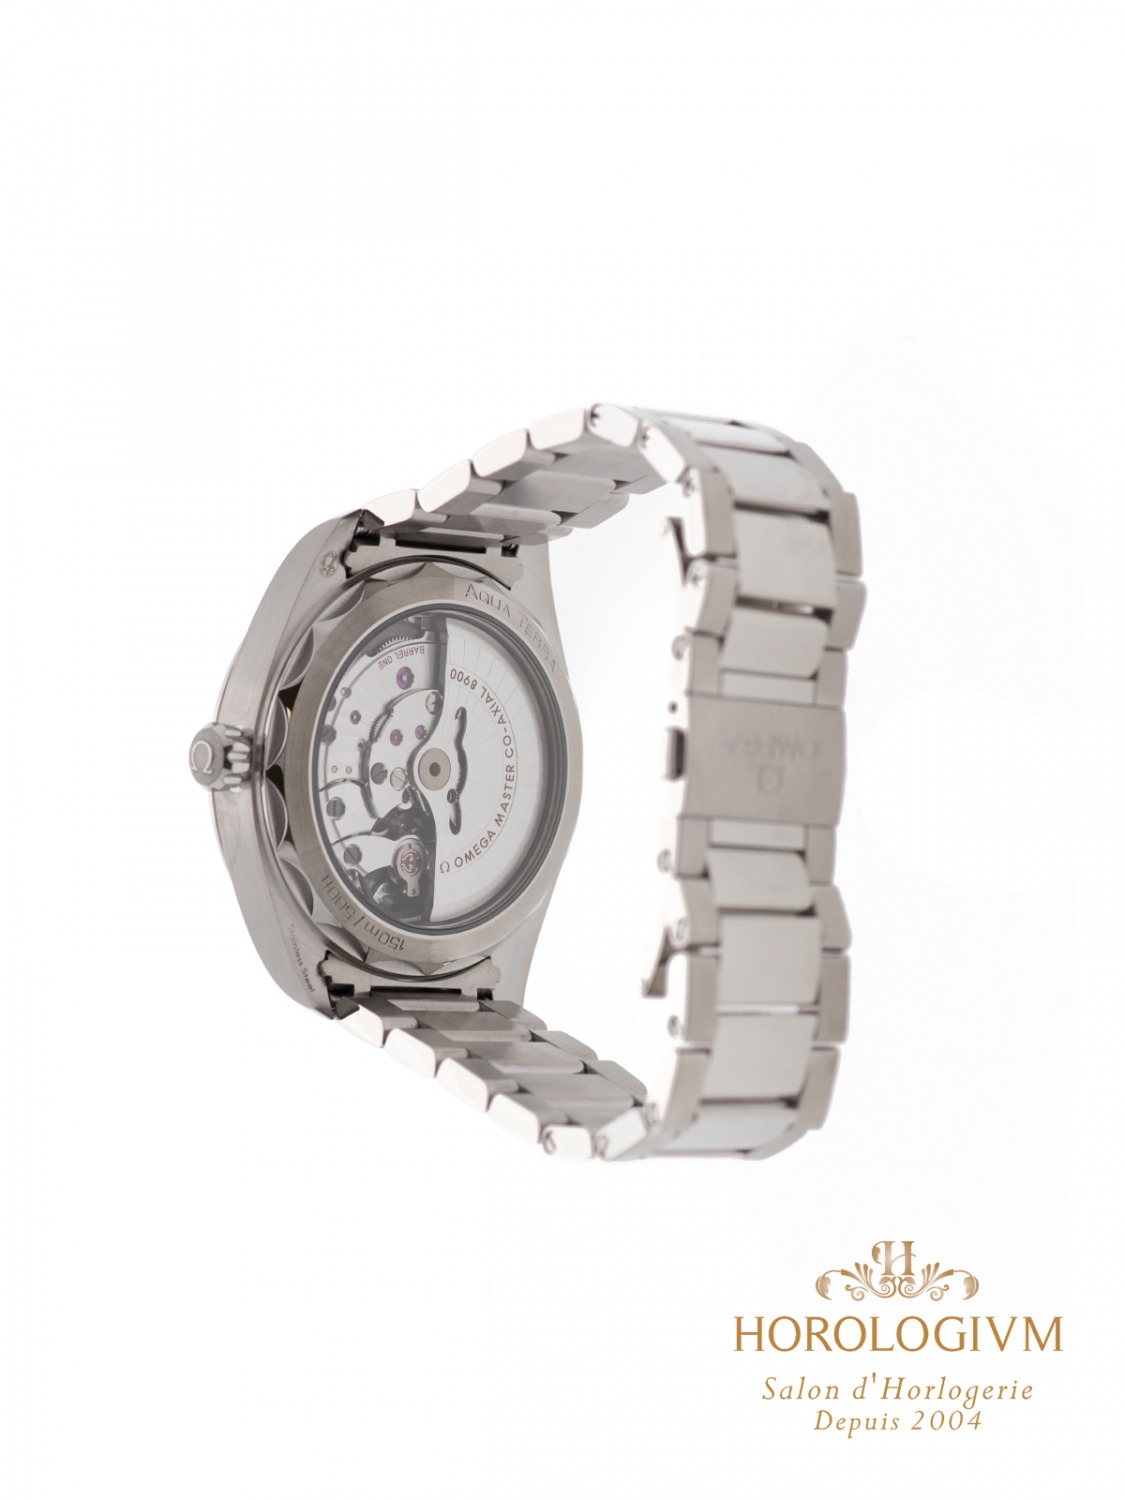 Omega Seamaster Master Chronometer Aqua Terra 150M REF. 22010412102001 watch, silver